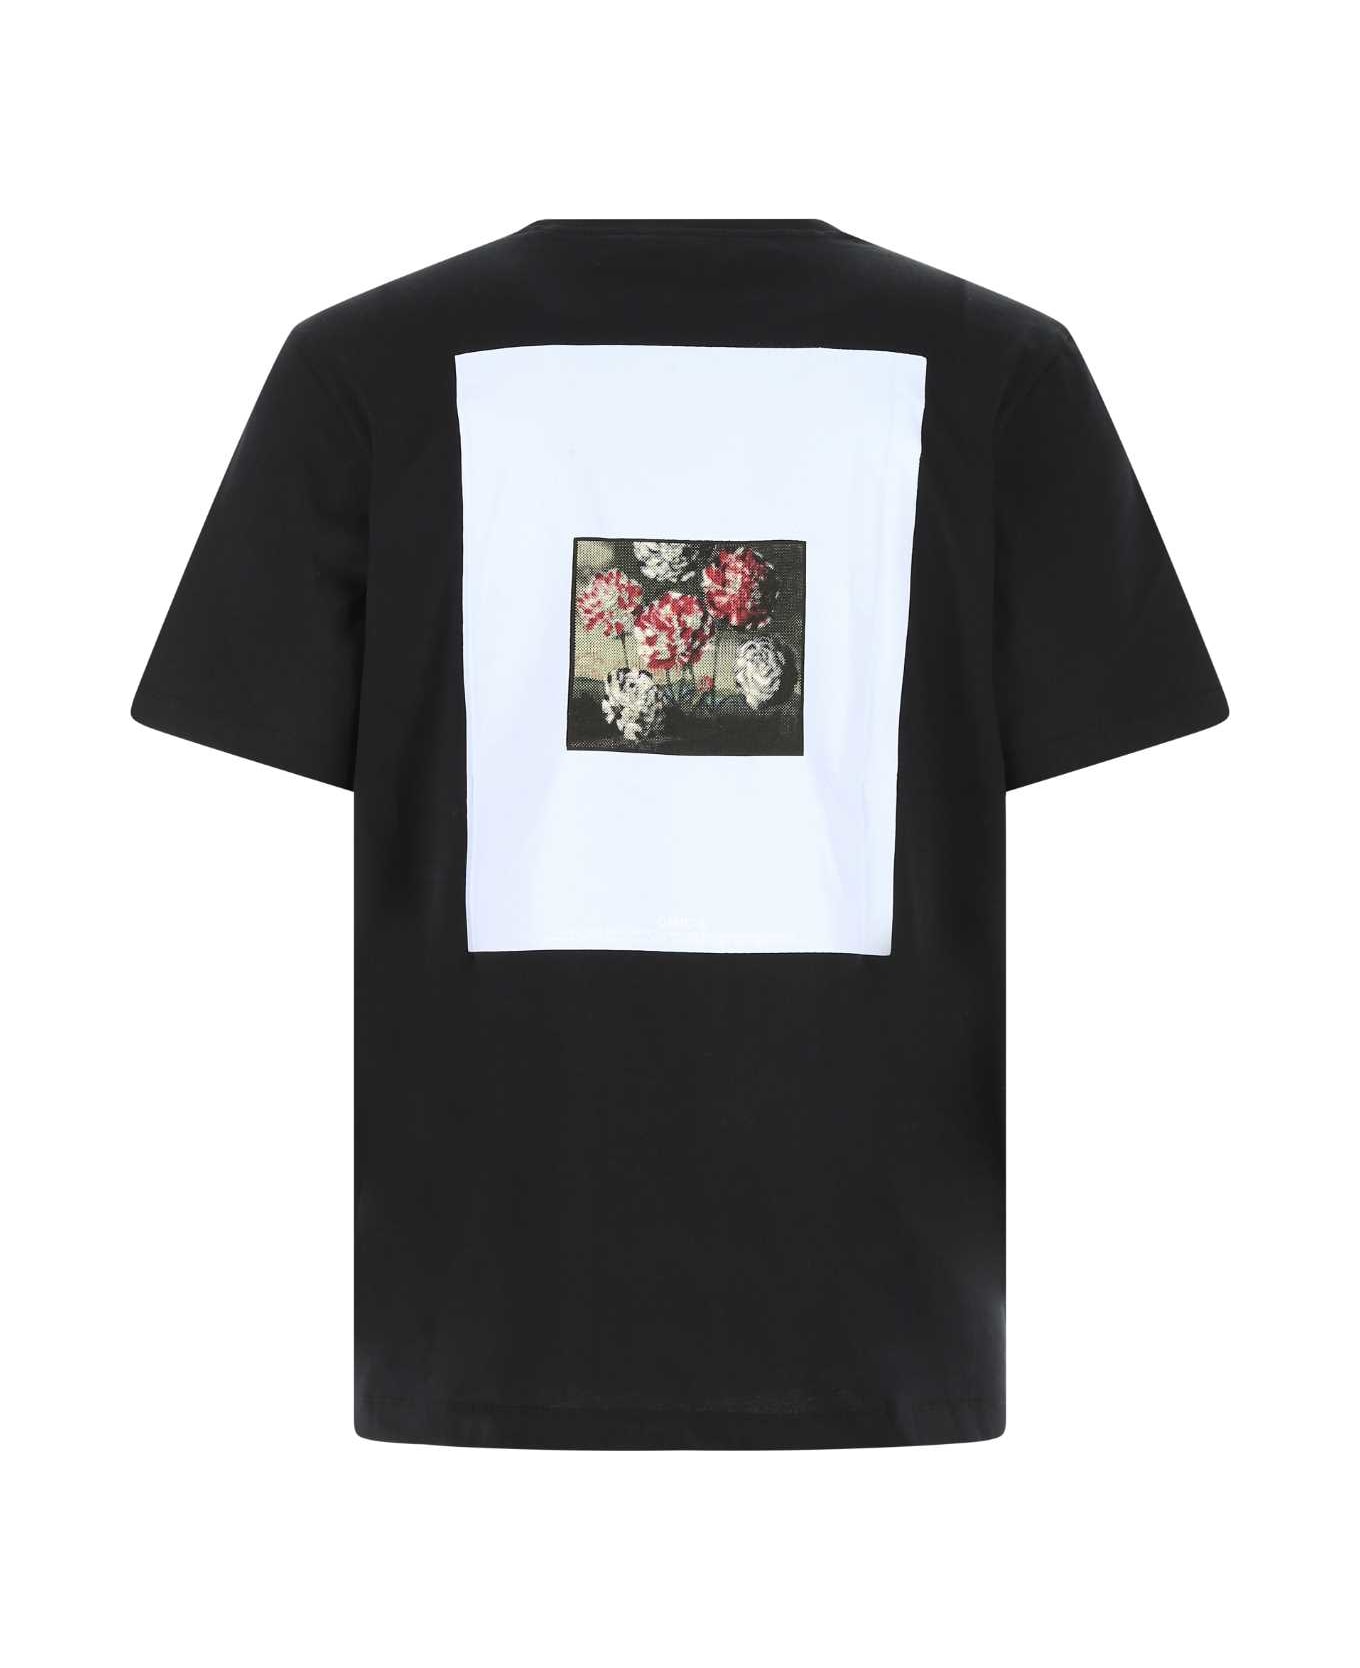 OAMC Black Cotton T-shirt - 001